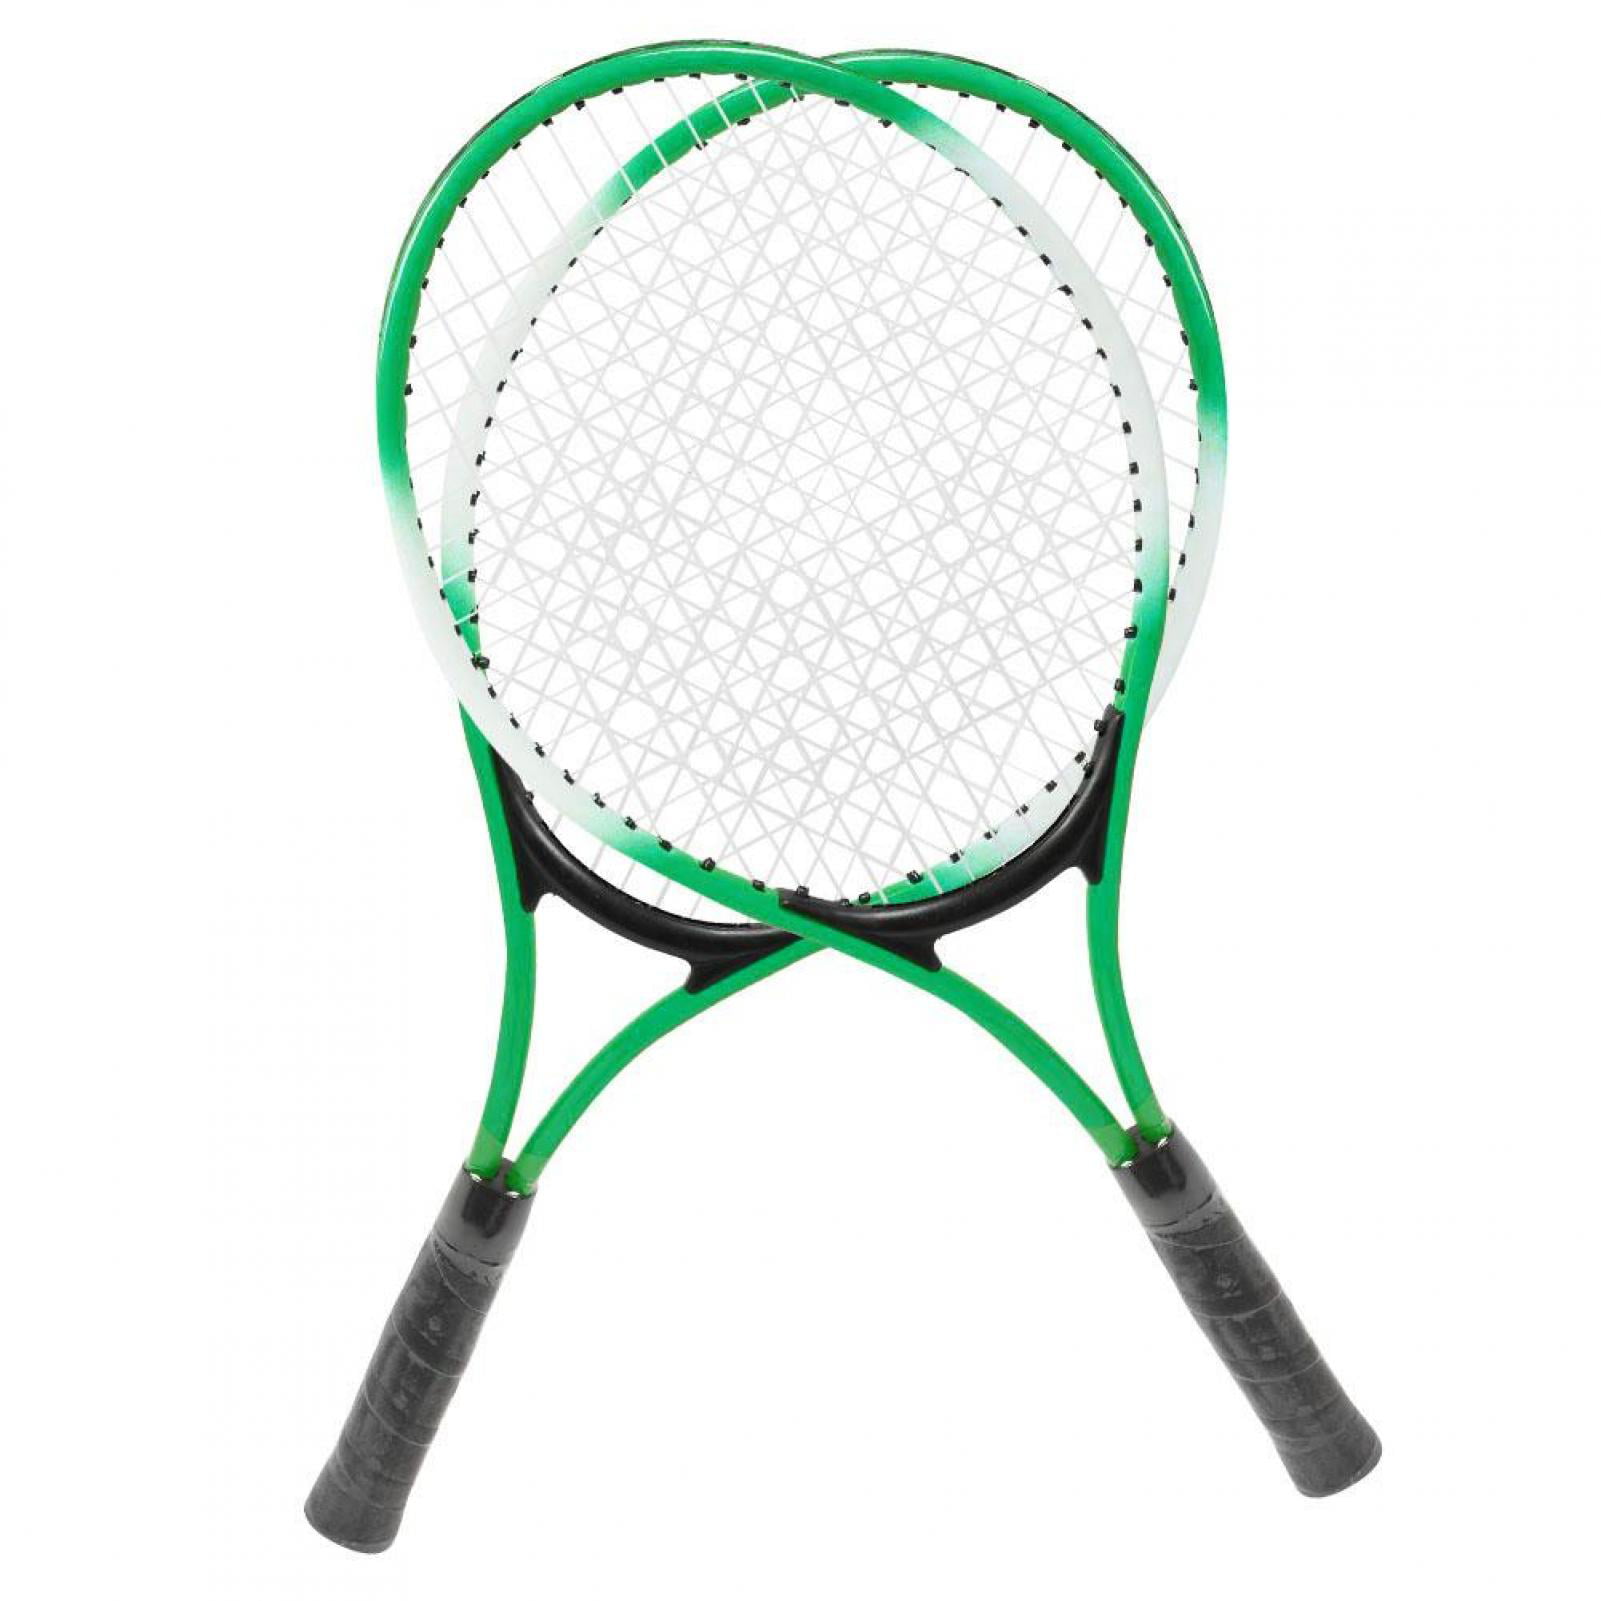 Tennis Racket Aluminium Alloy Material Racquet Sports Racquets Hot Practice Tool 